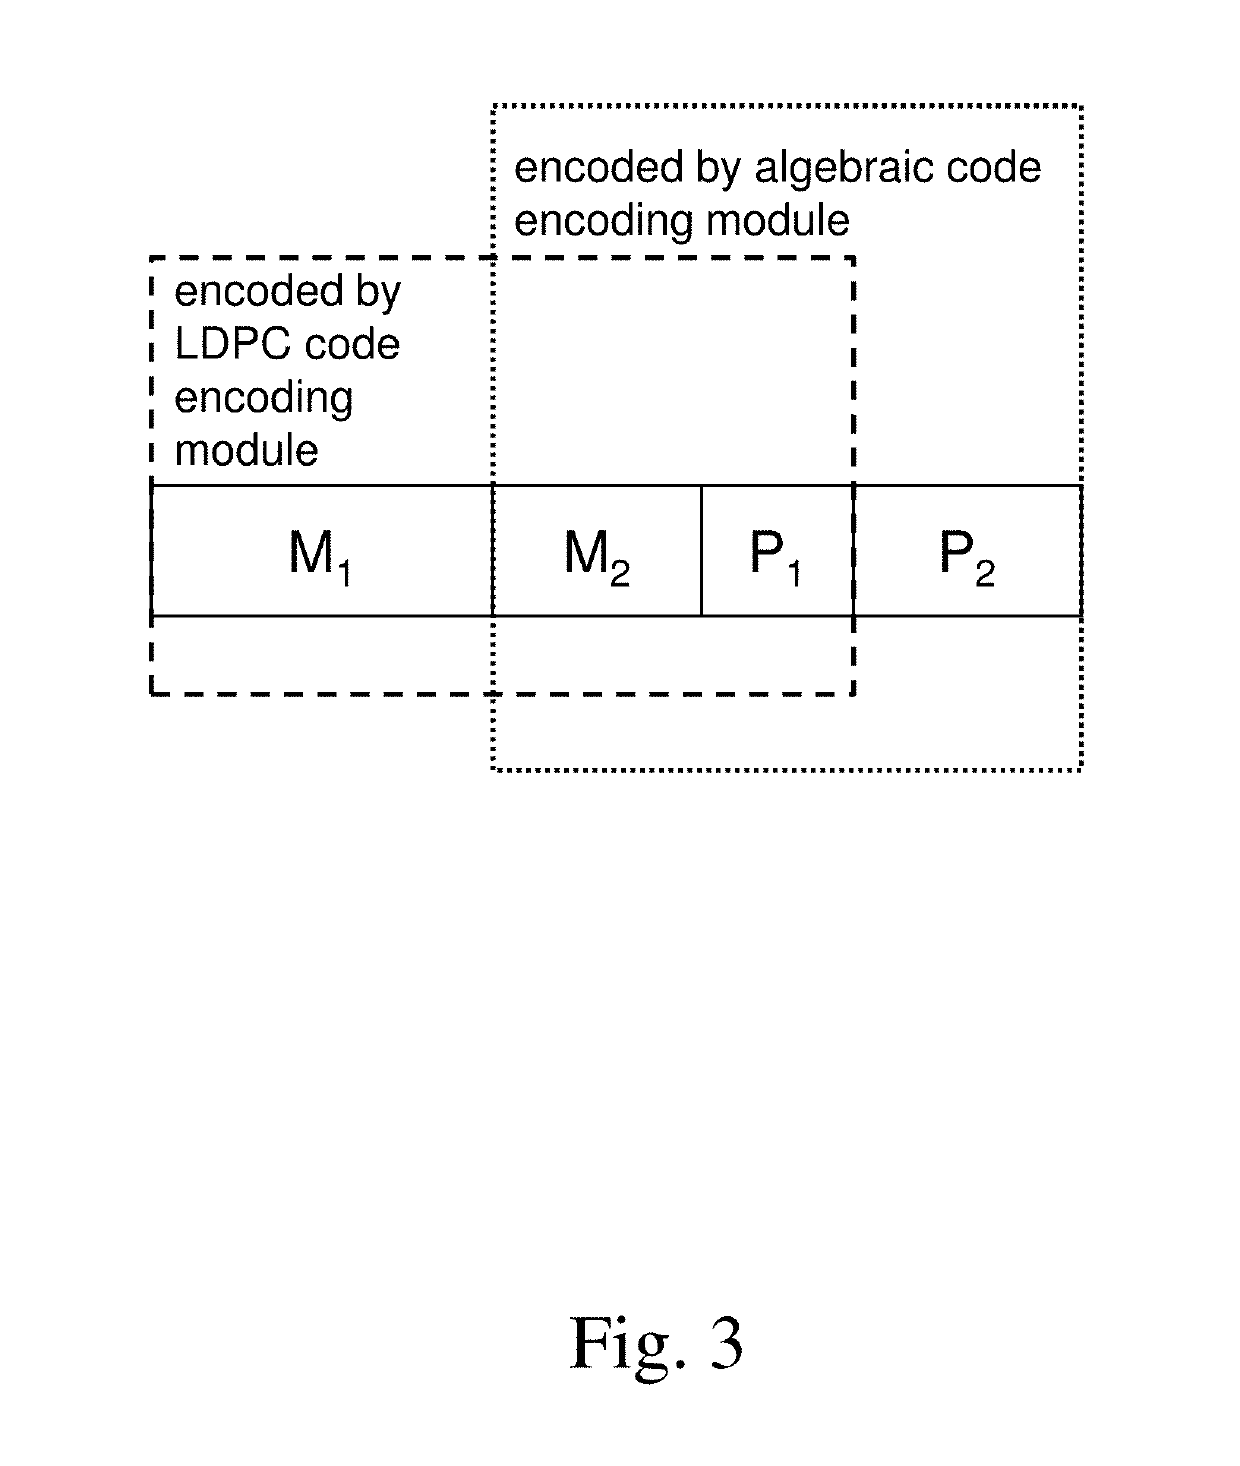 Partial concatenated coding system using algebraic code and LDPC code